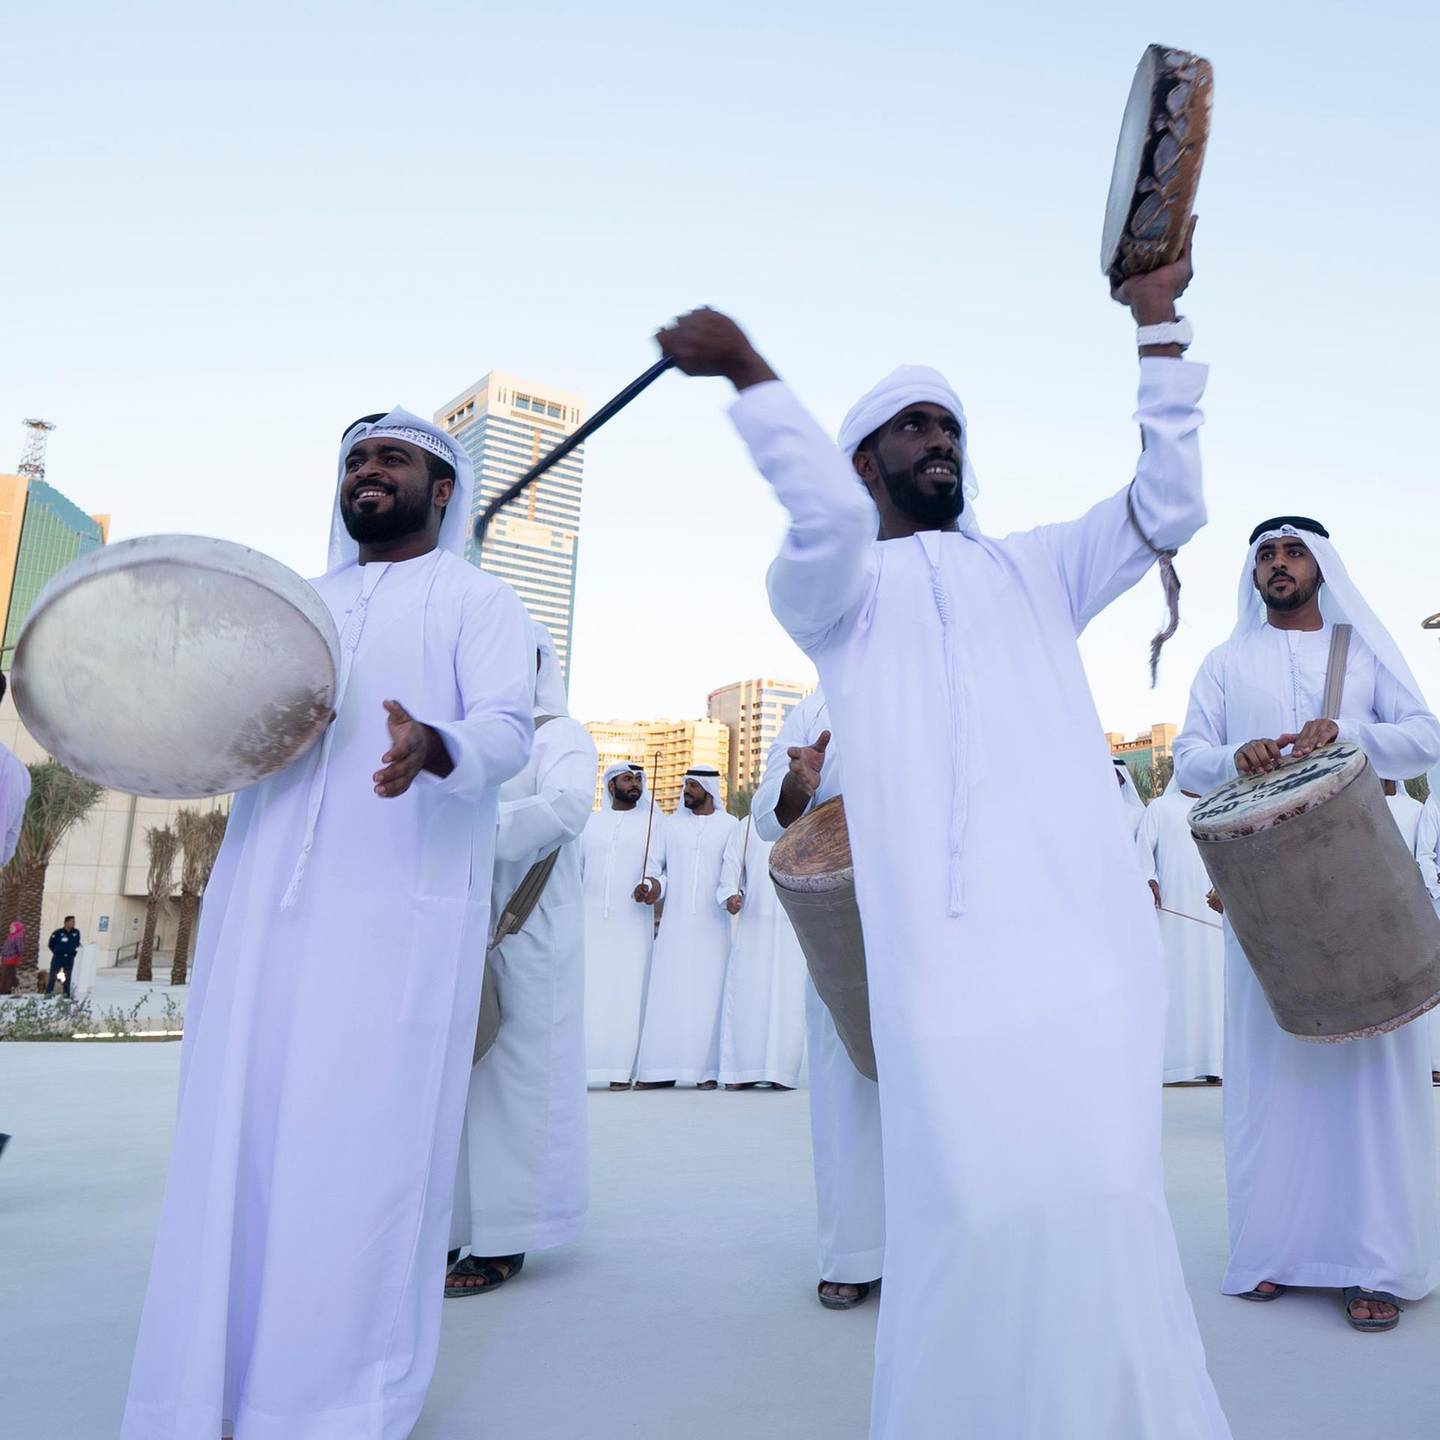 A traditional Emirati performance presented at Qasr Al Hosn. Courtesy Al Hosn